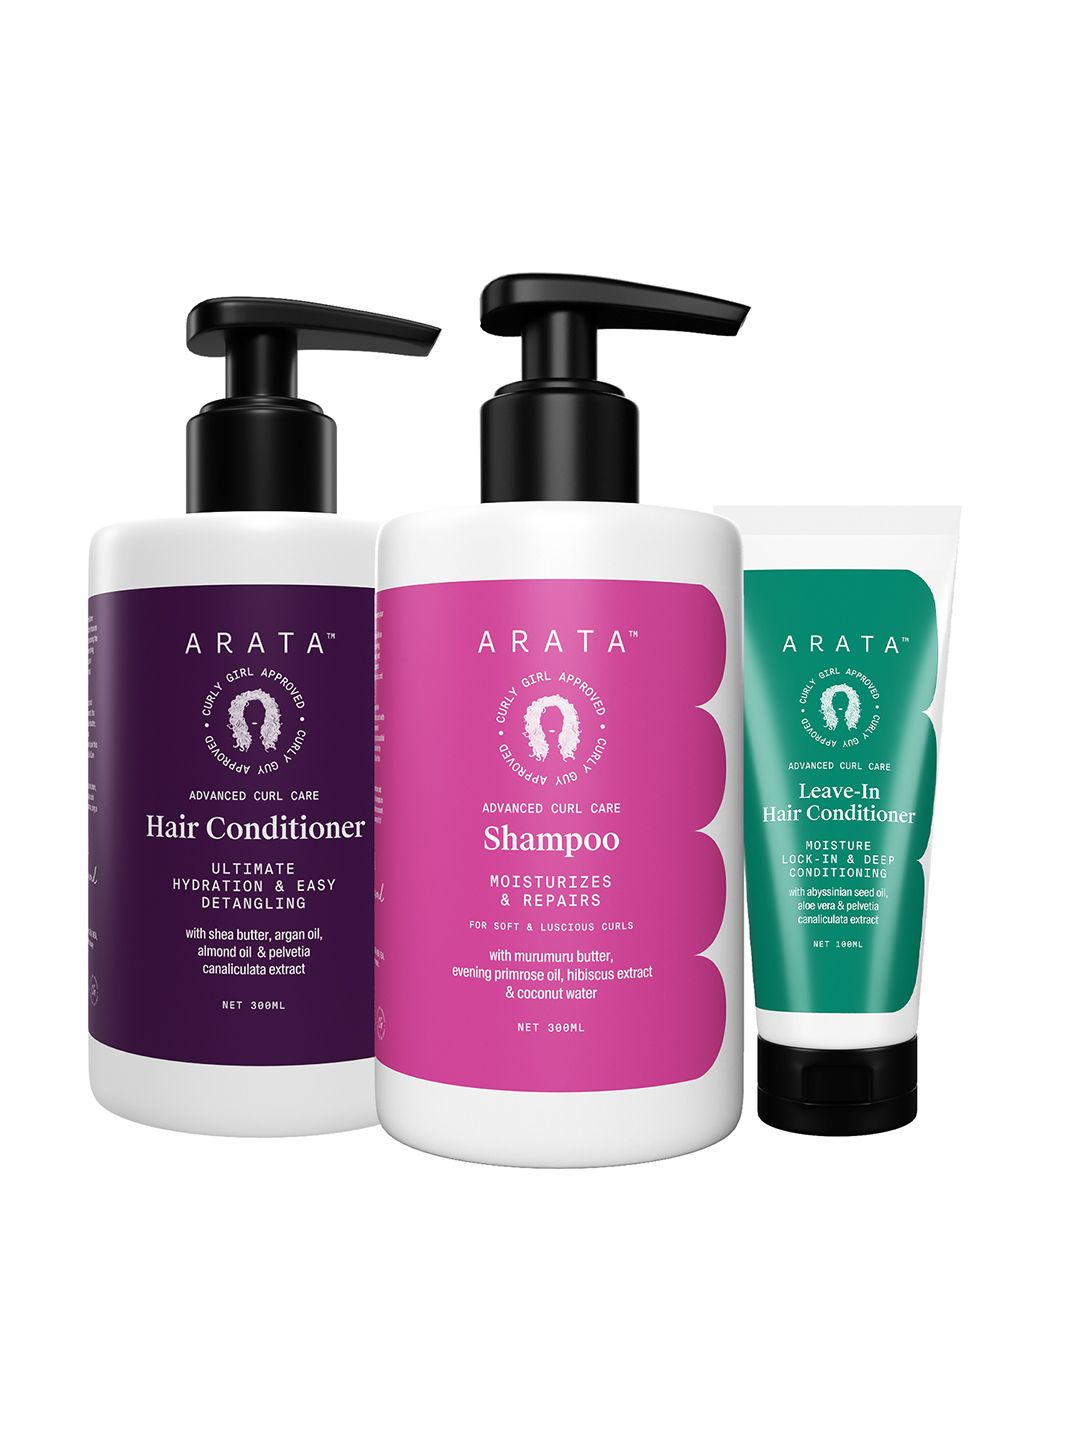 ARATA Set of Advanced Curl Care Vegan Hair Conditioner Shampoo & Leave-In Conditioner Price in India